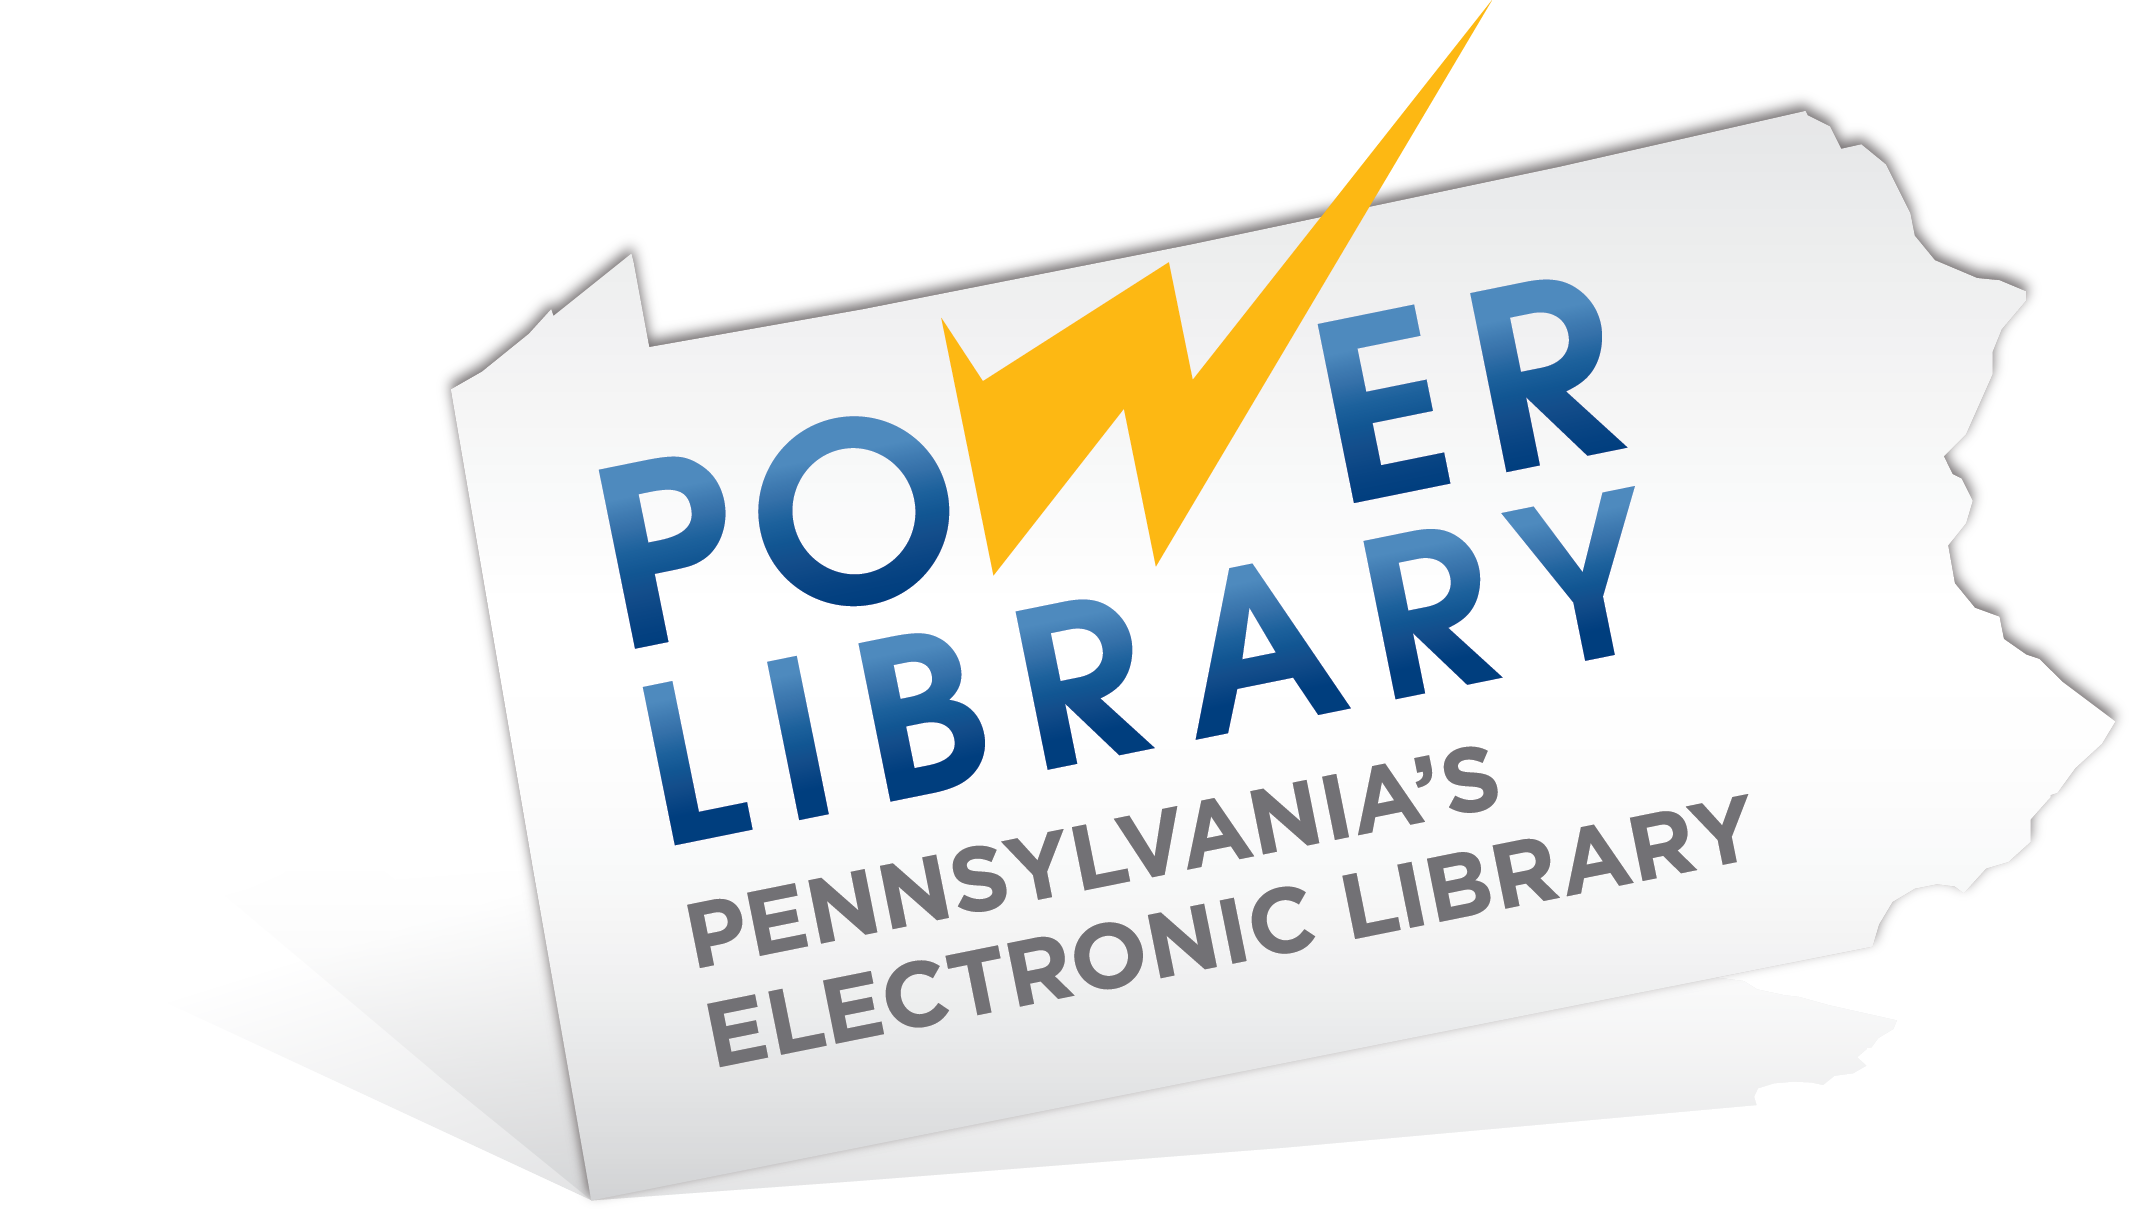 Logo for POWER Library, Pennsylvania's Electronic Library